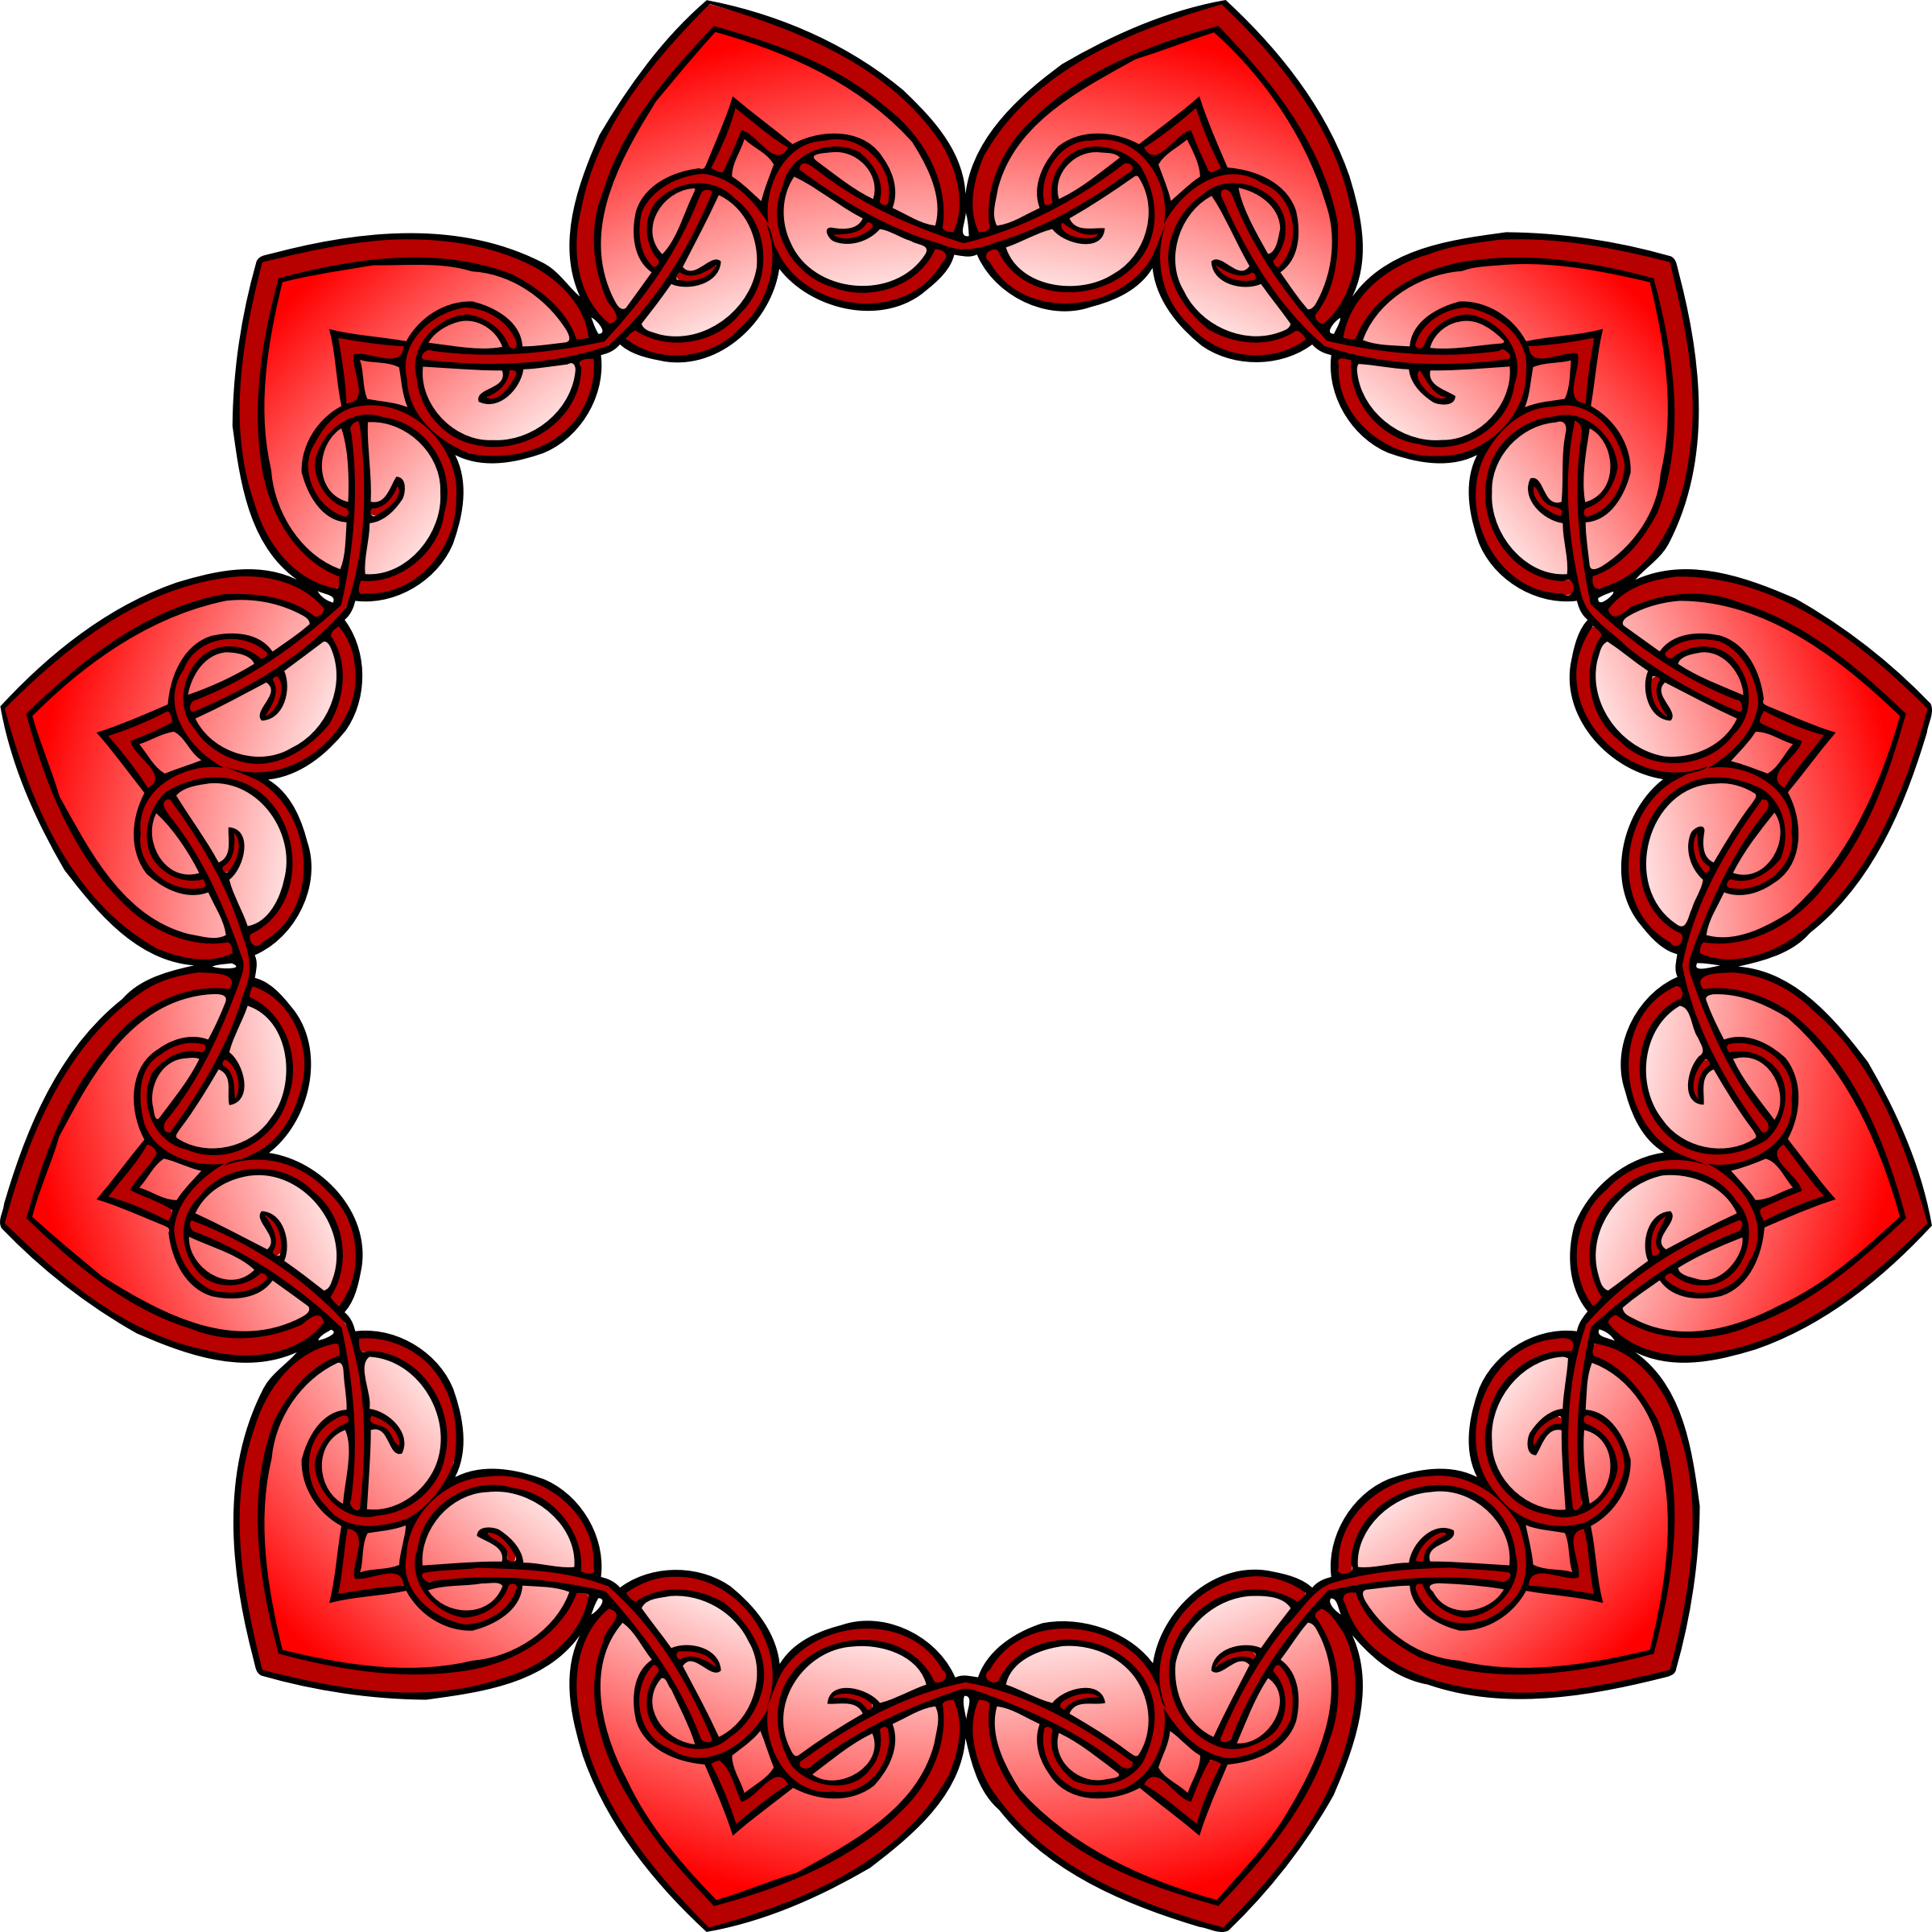 This Free Icons Png Design Of Hearts Frame - Hindu Mandala Border Clipart (2400x2400), Png Download